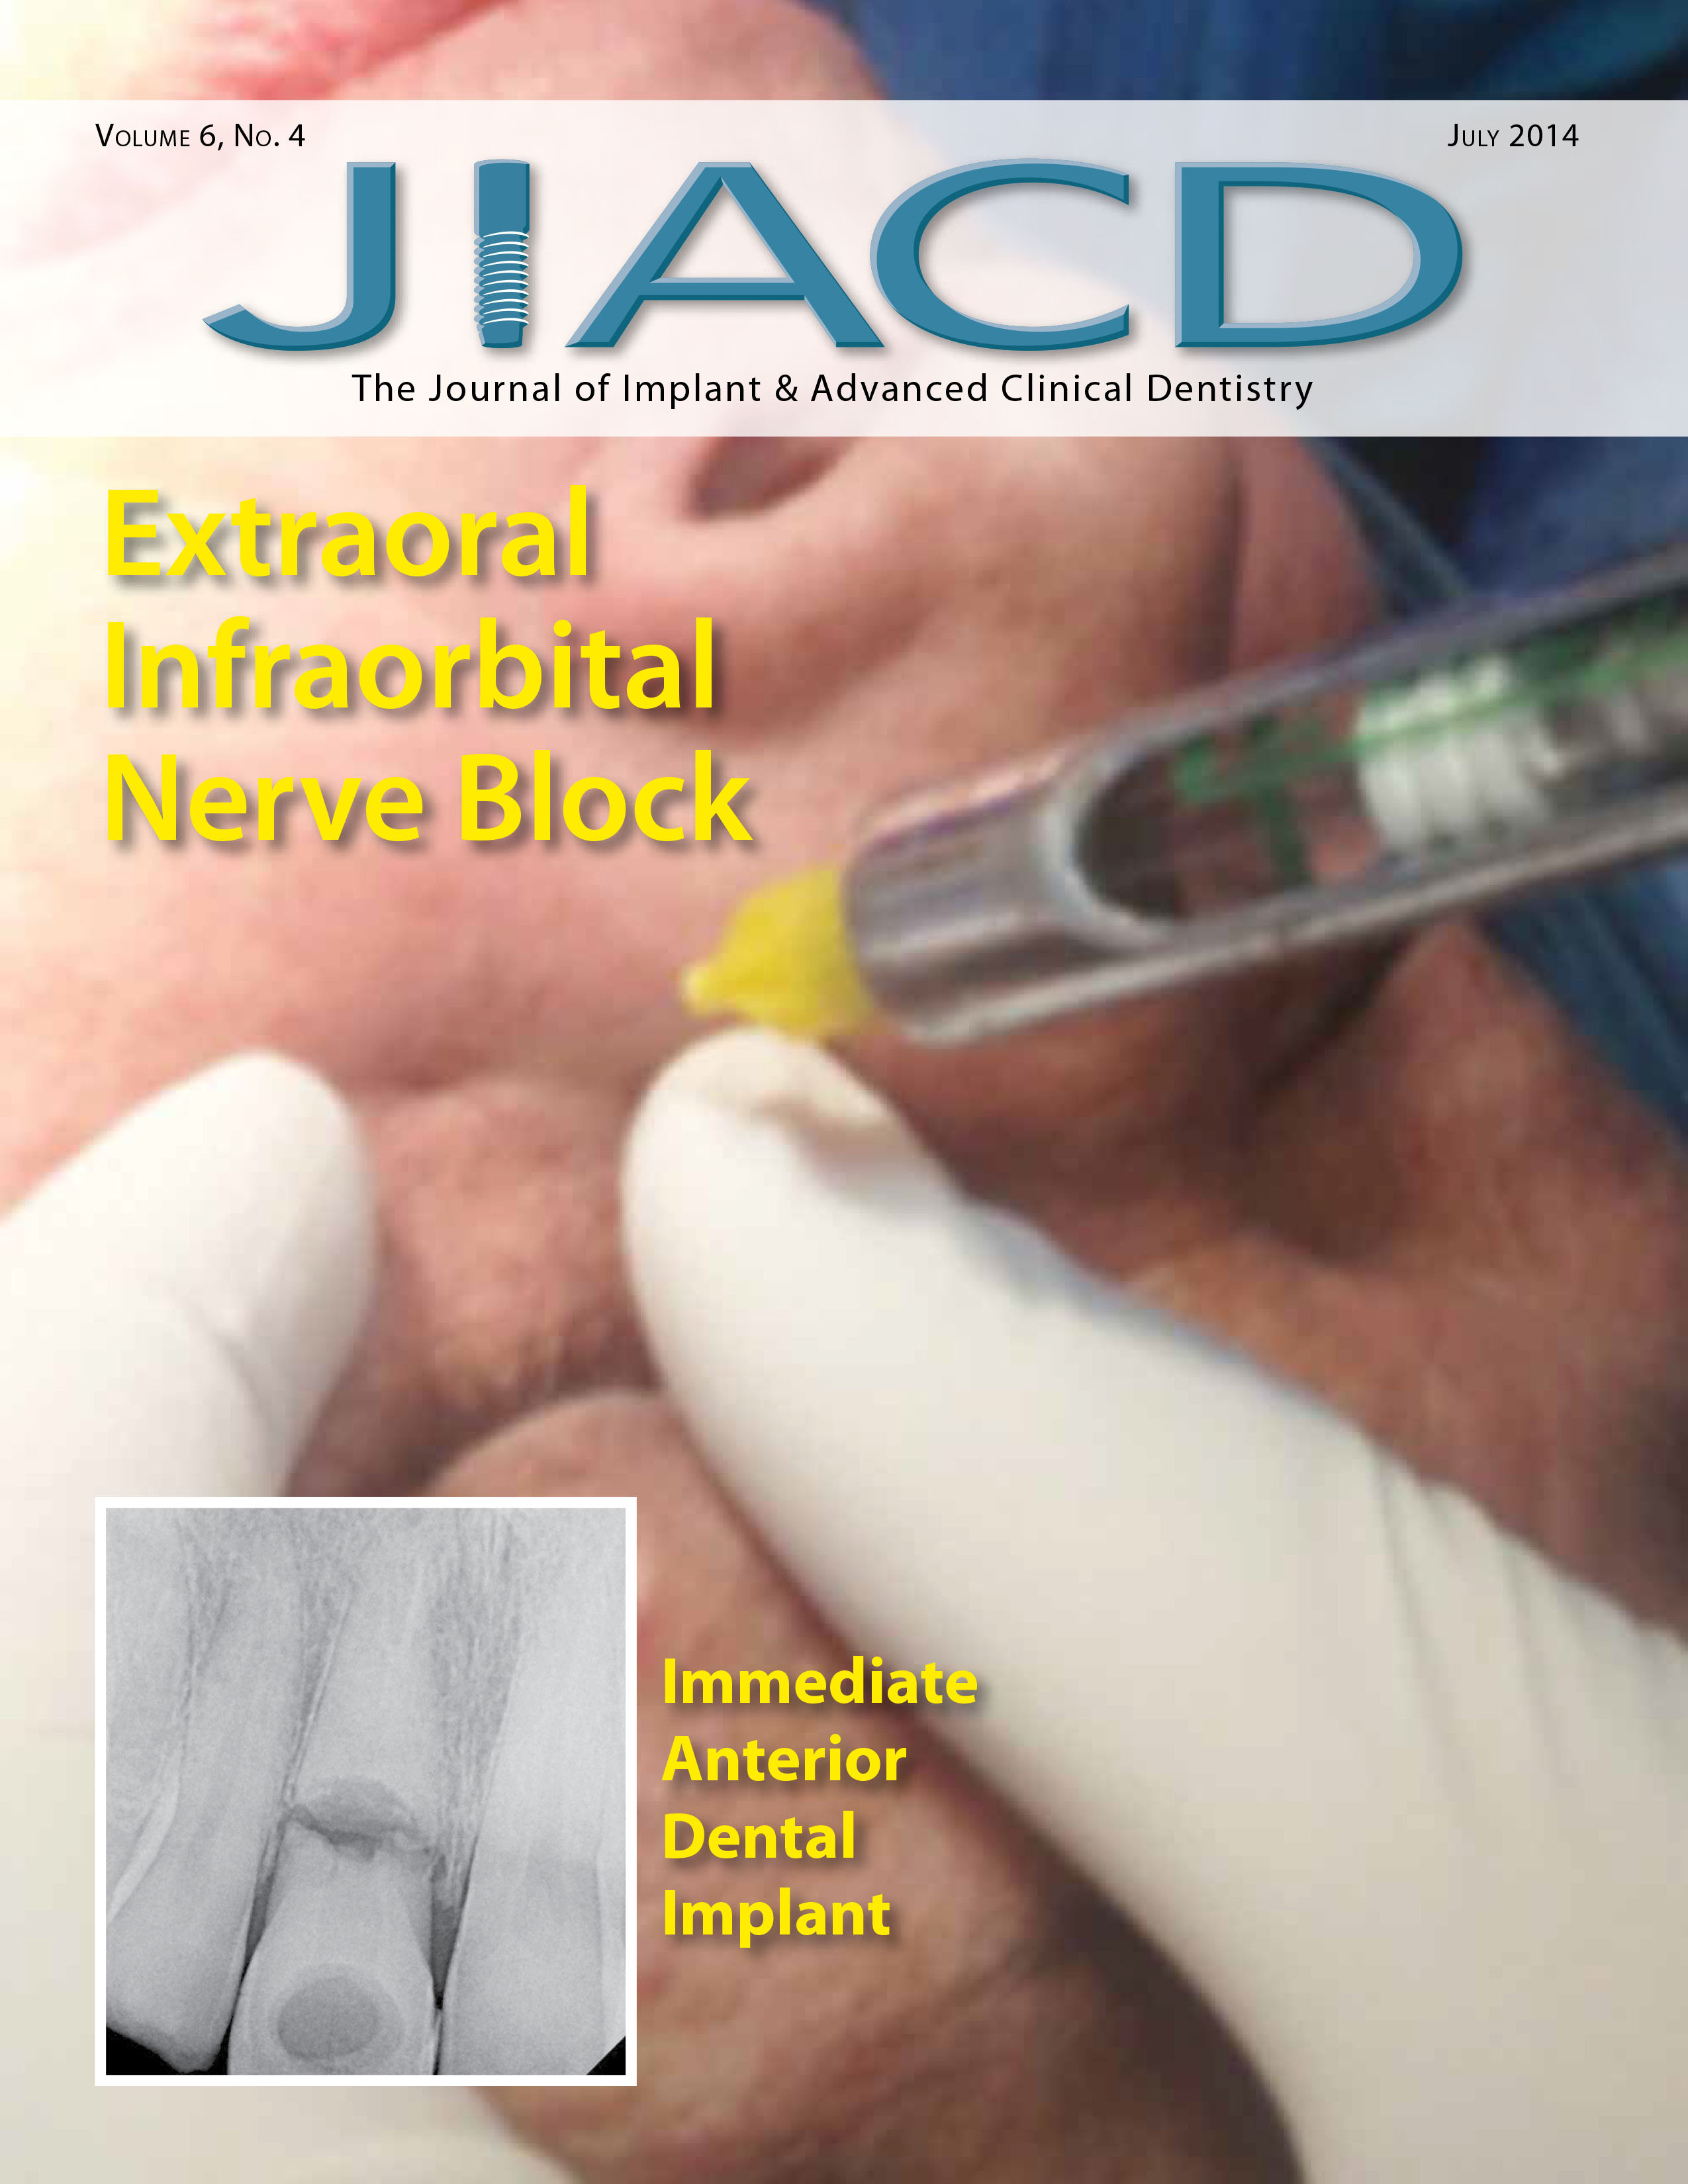 Extraoral Infraorbital Nerve Block – Immediate Anterior Dental Implant